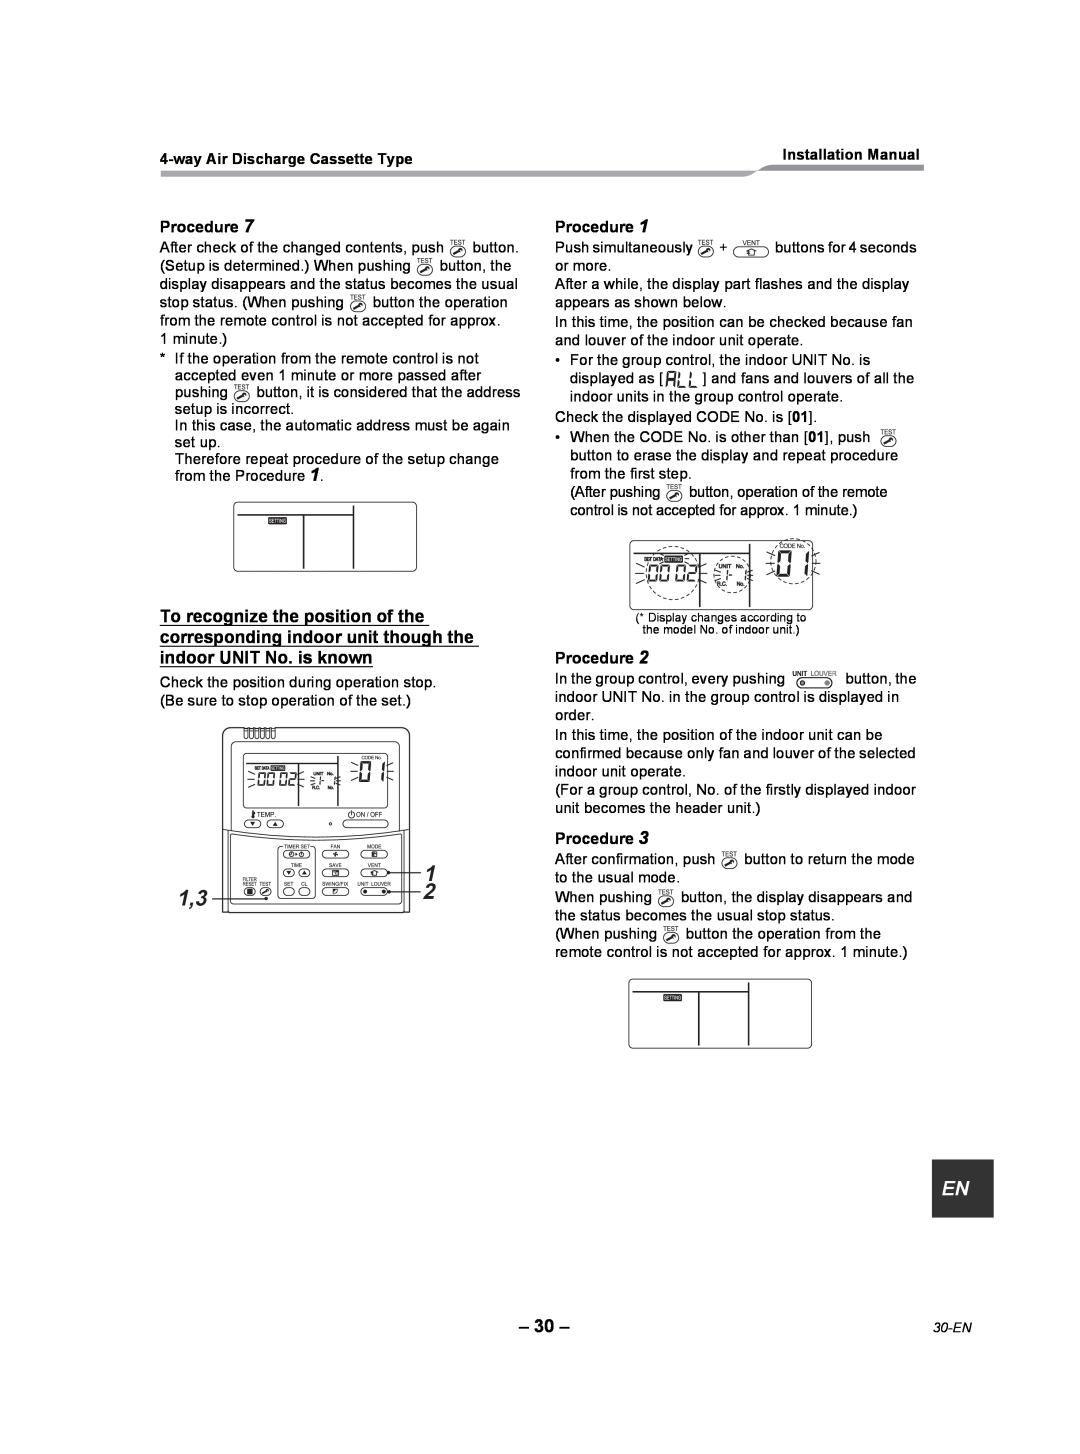 Toshiba RAV-SP180UT-UL installation manual Procedure, wayAir Discharge Cassette Type 